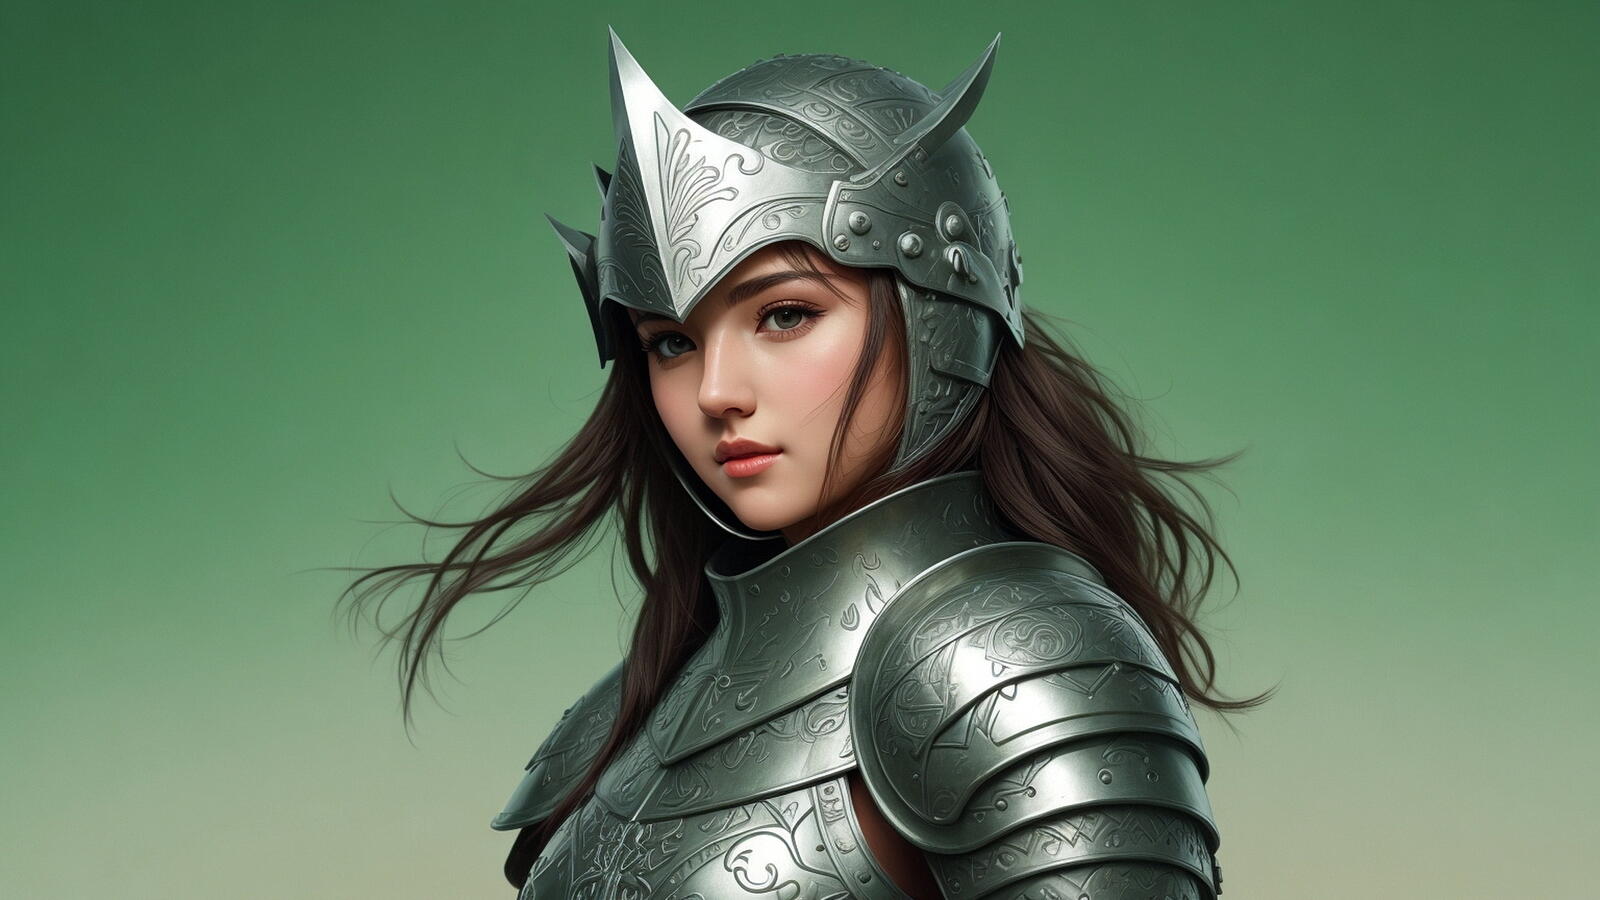 Бесплатное фото Девушка рыцарь на зеленом фоне